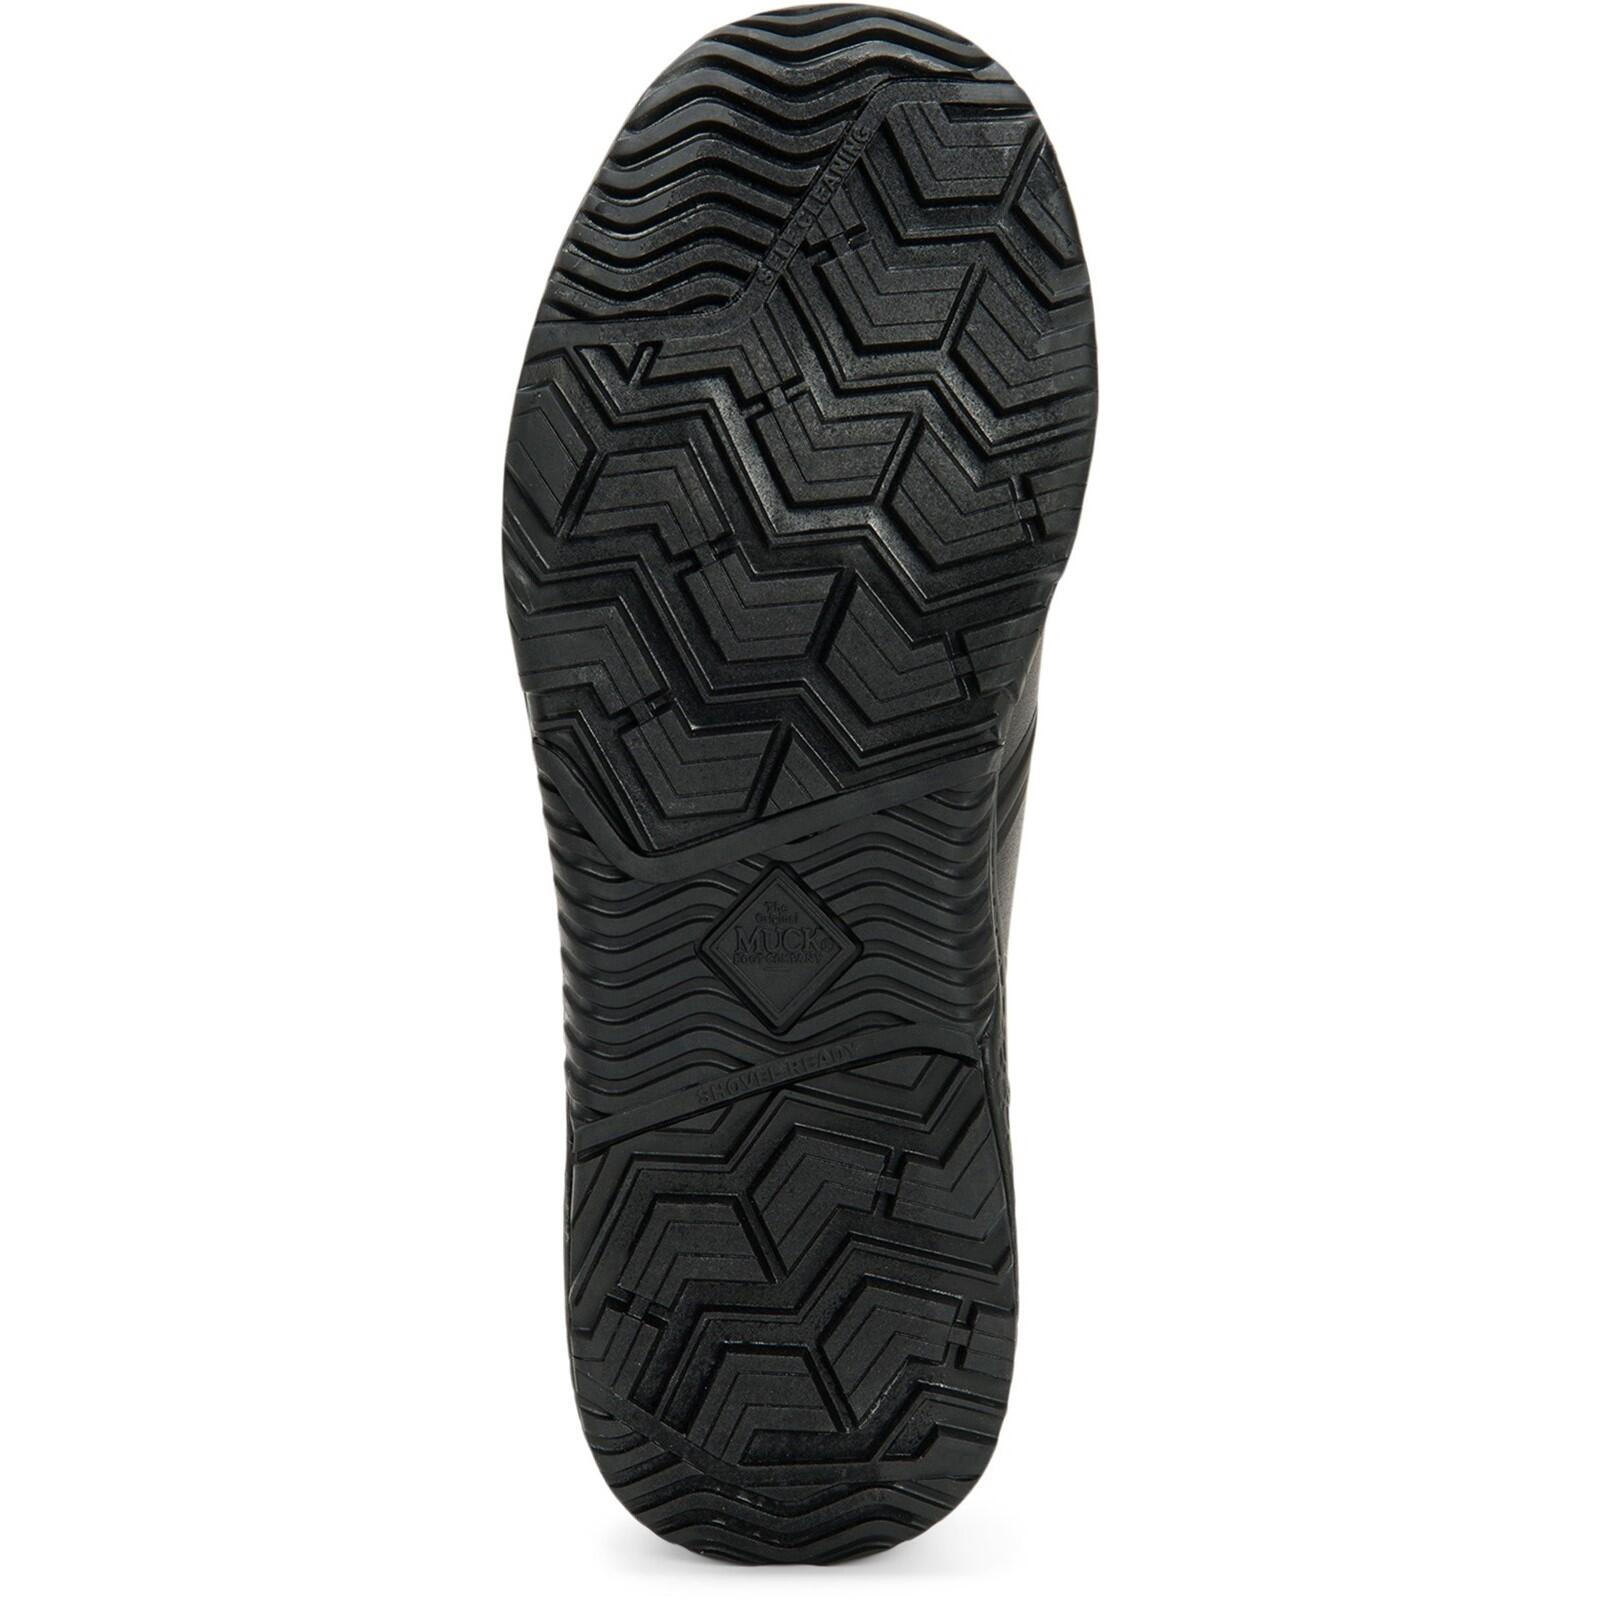 Outscape Low Slip On Mens Shoes BLACK 5/5